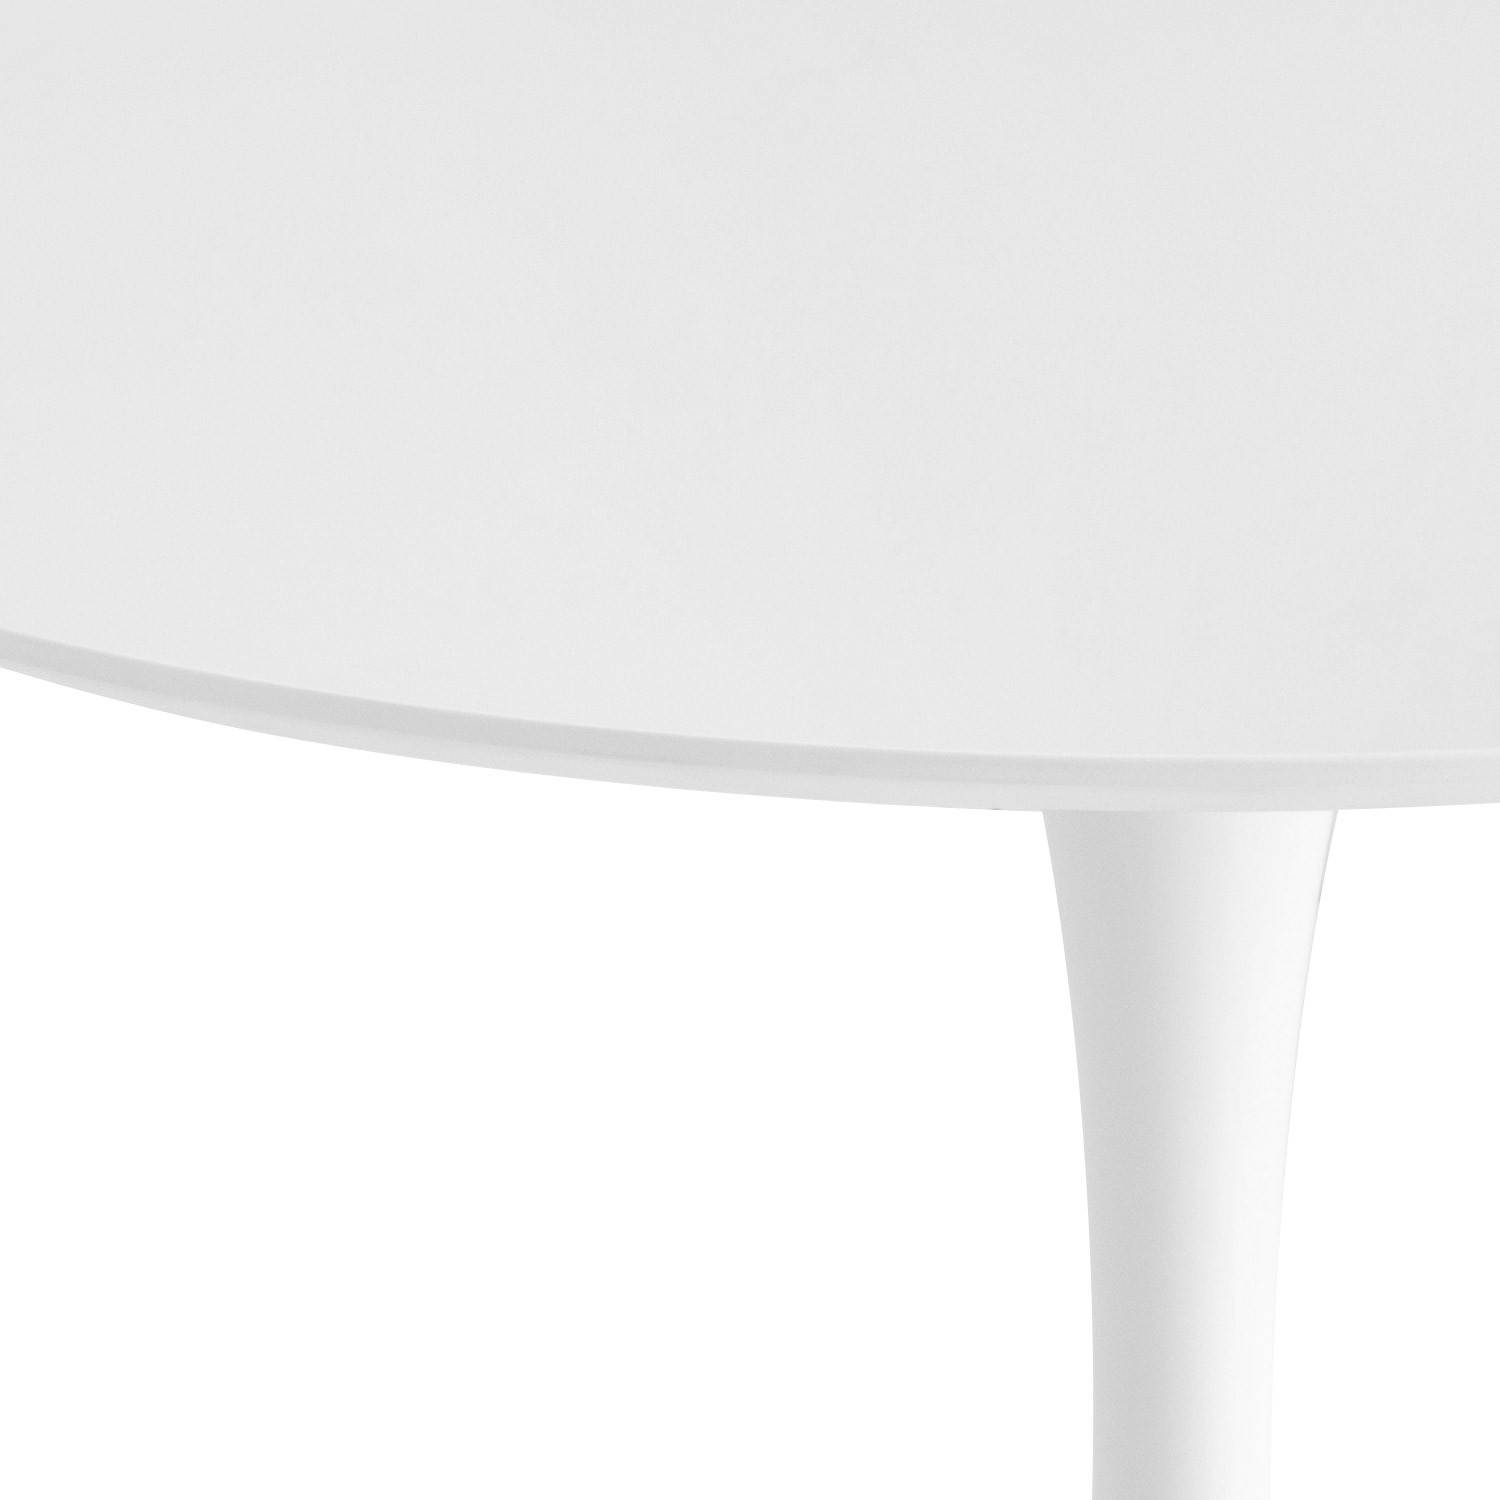 TABLE RONDE IBIZA WHITE Ø90 CM - Tables 